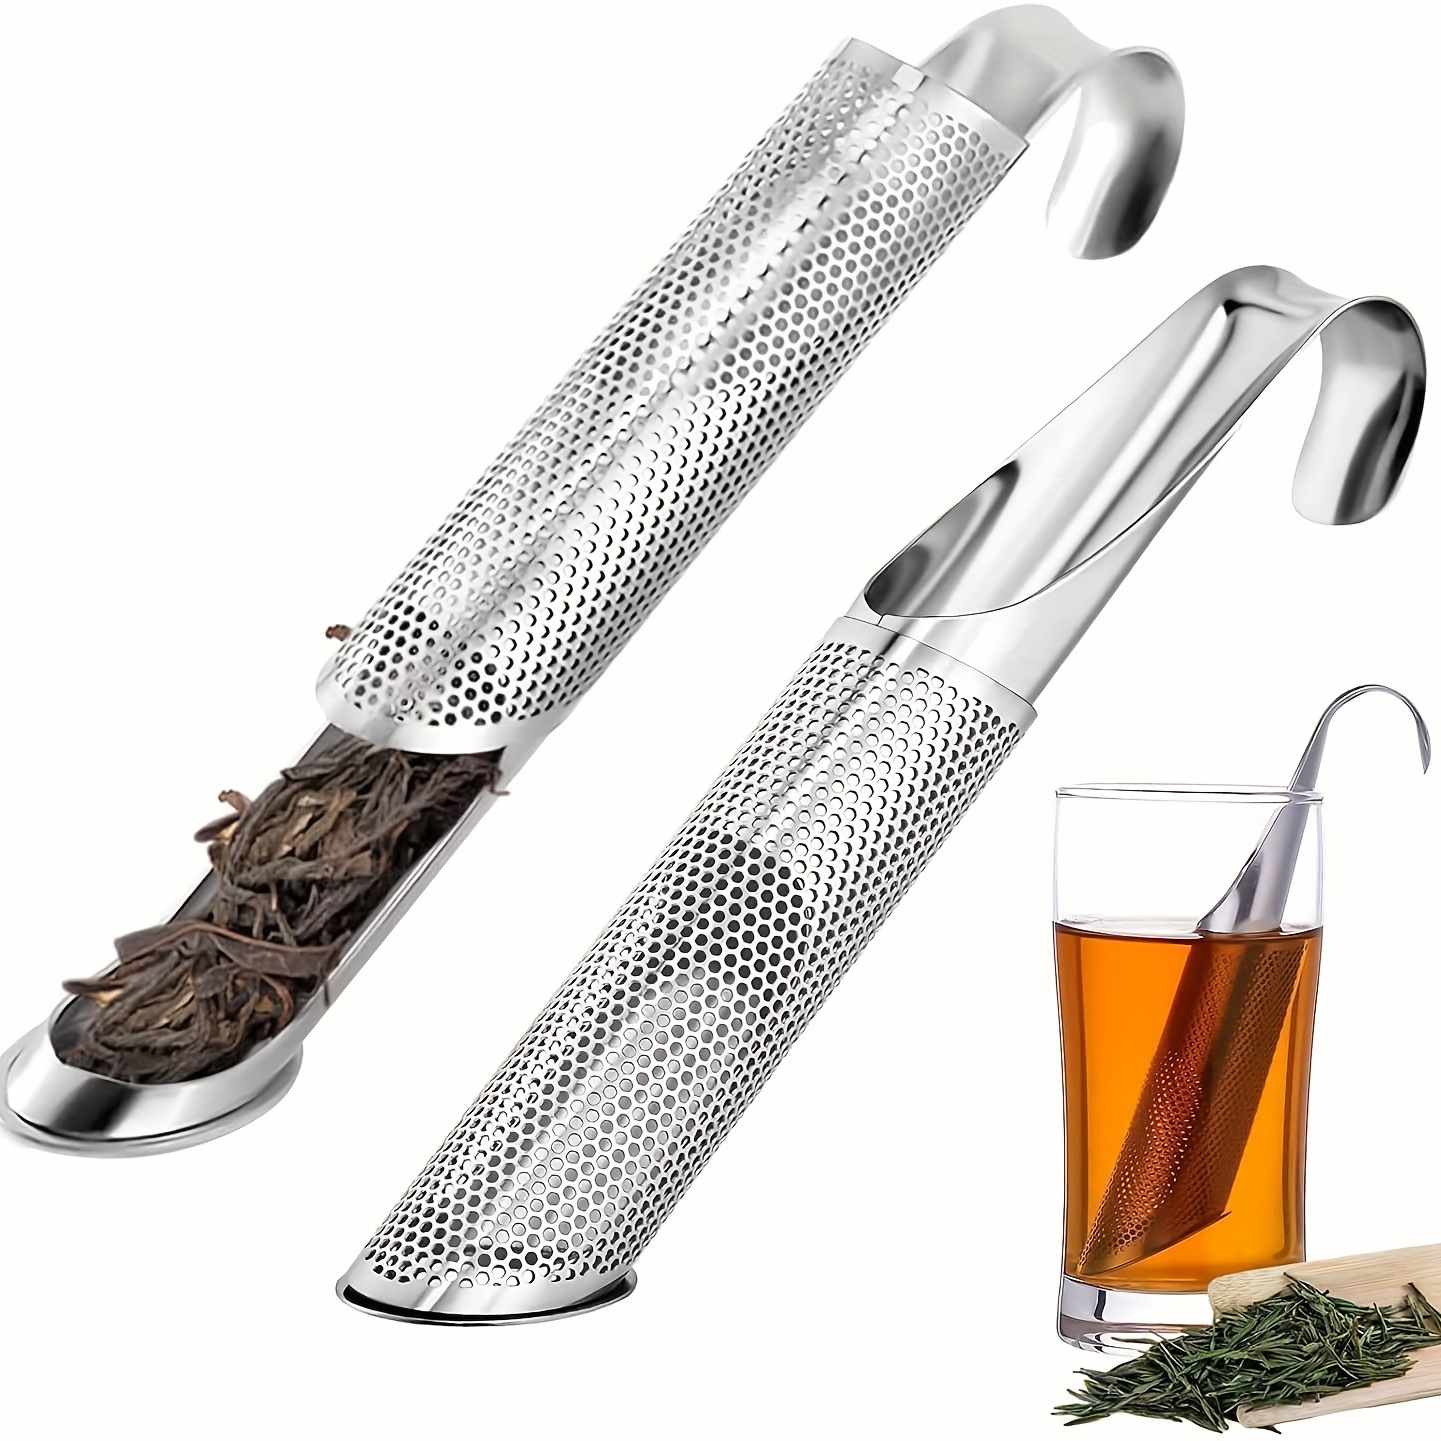  Difusor de té, difusor de té de acero inoxidable para té  suelto, difusor de té de acero inoxidable, 2 unidades de infusor de té,  colador de bolas para colador de especias